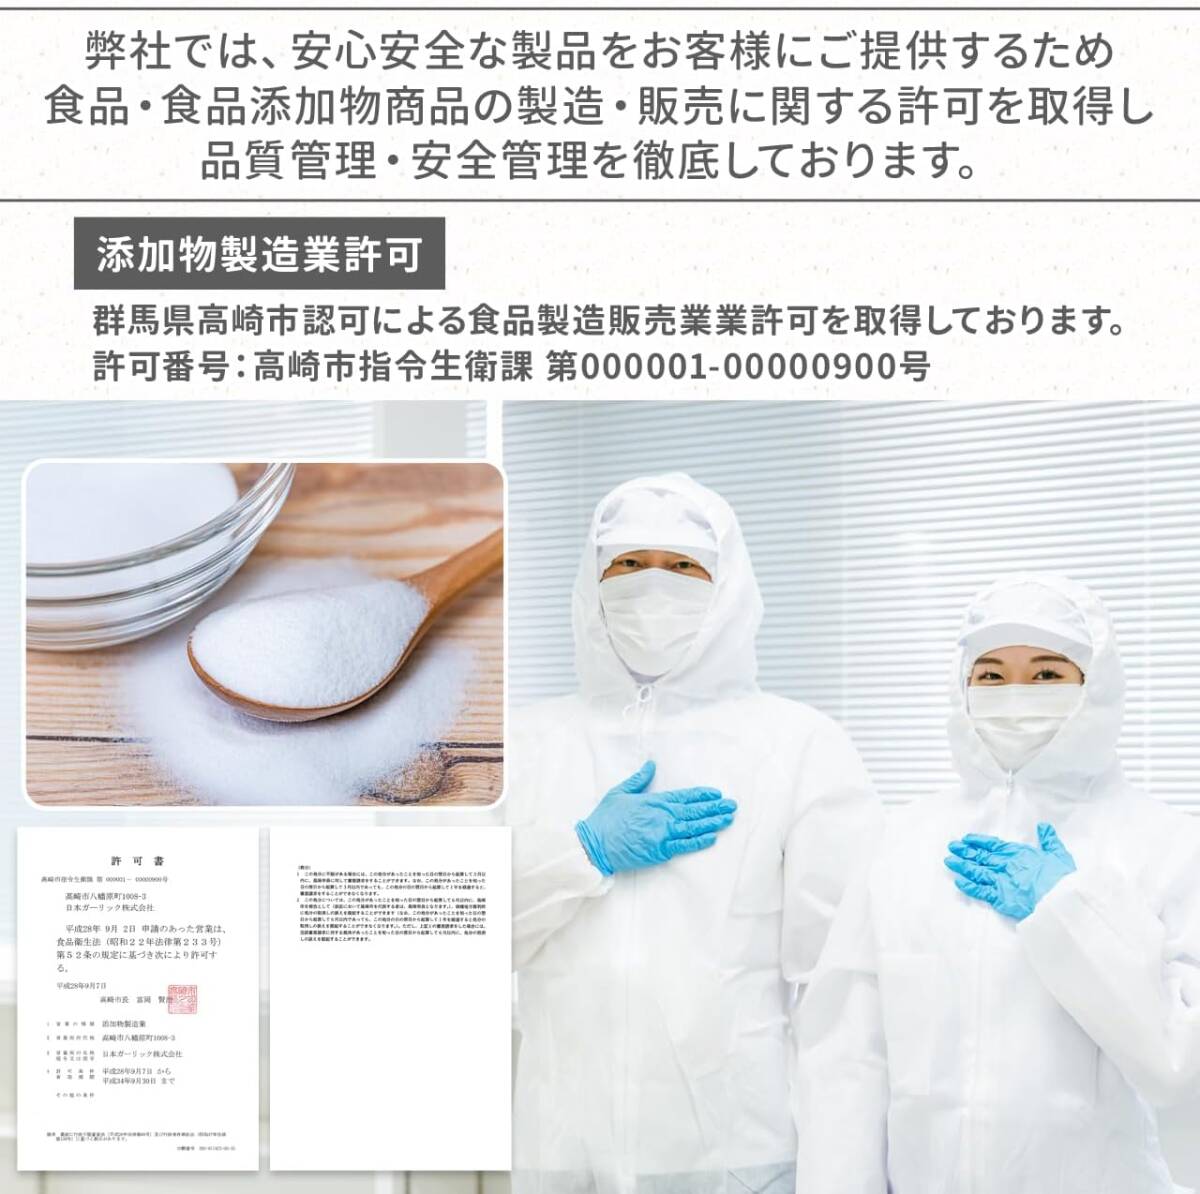 900 gram (x 1) NICHIGA(nichiga)[ powder shape ] salt . Magne sium( domestic manufacture )900g food additive Seto inside .. manufacture ...